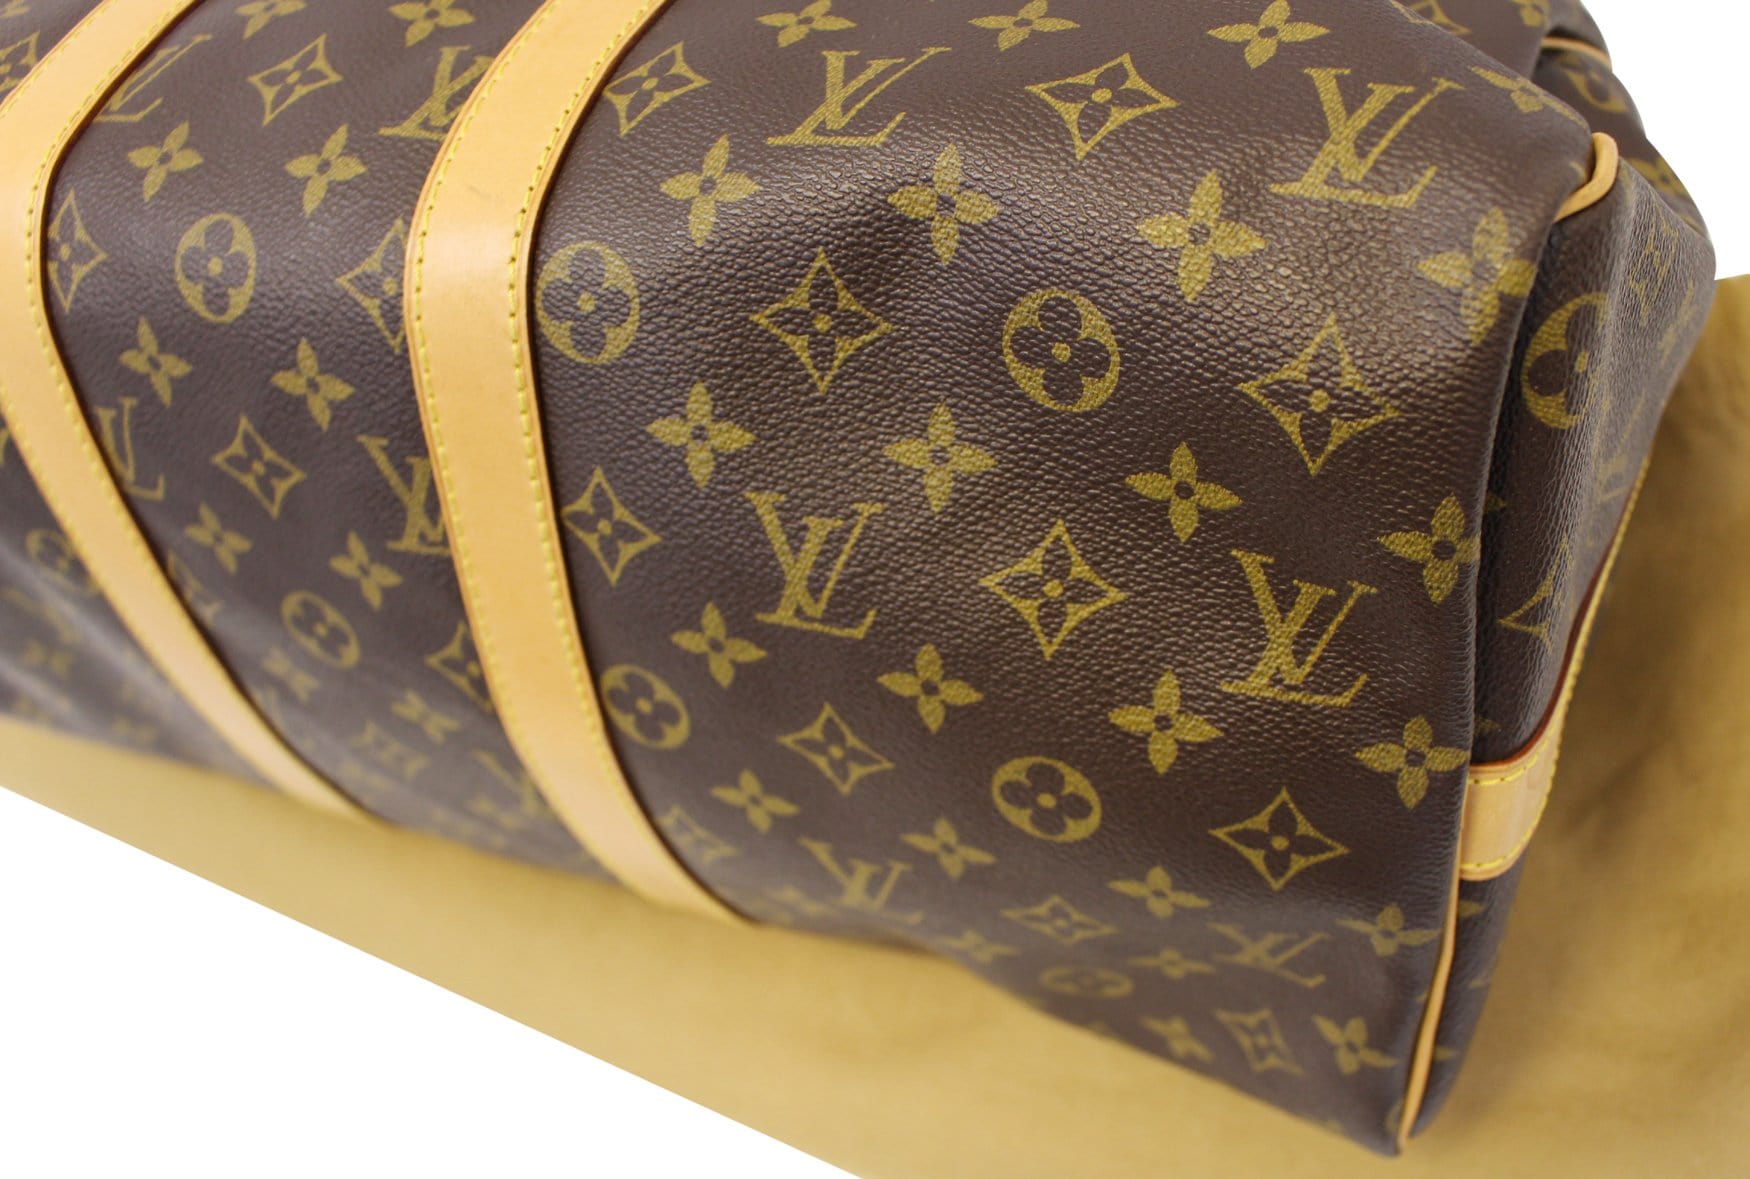 Louis Vuitton Keepall Bandouliere 45 Sunrise Pastel Pink Monogram Travel Bag